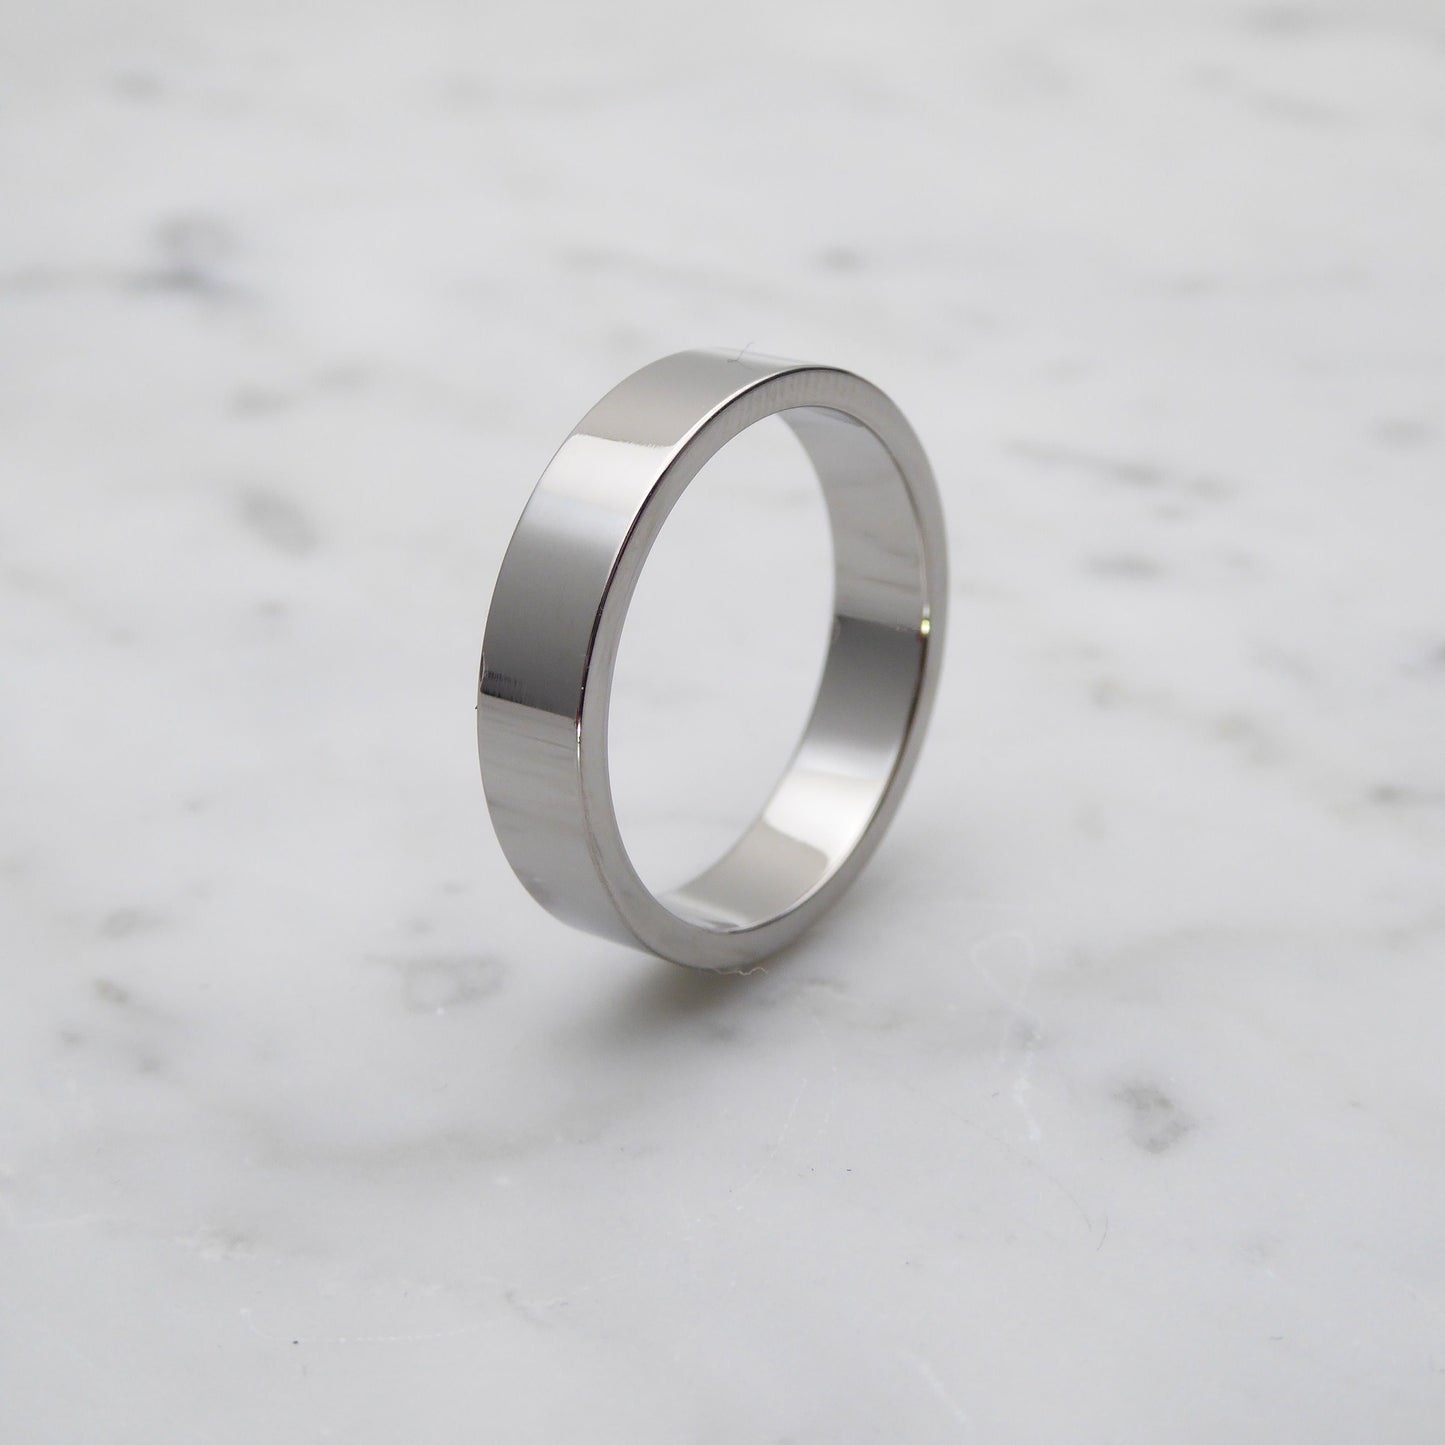 5mm Titanium Flat / Square Shape Plain band Wedding Ring - available in polished and brushed finishes